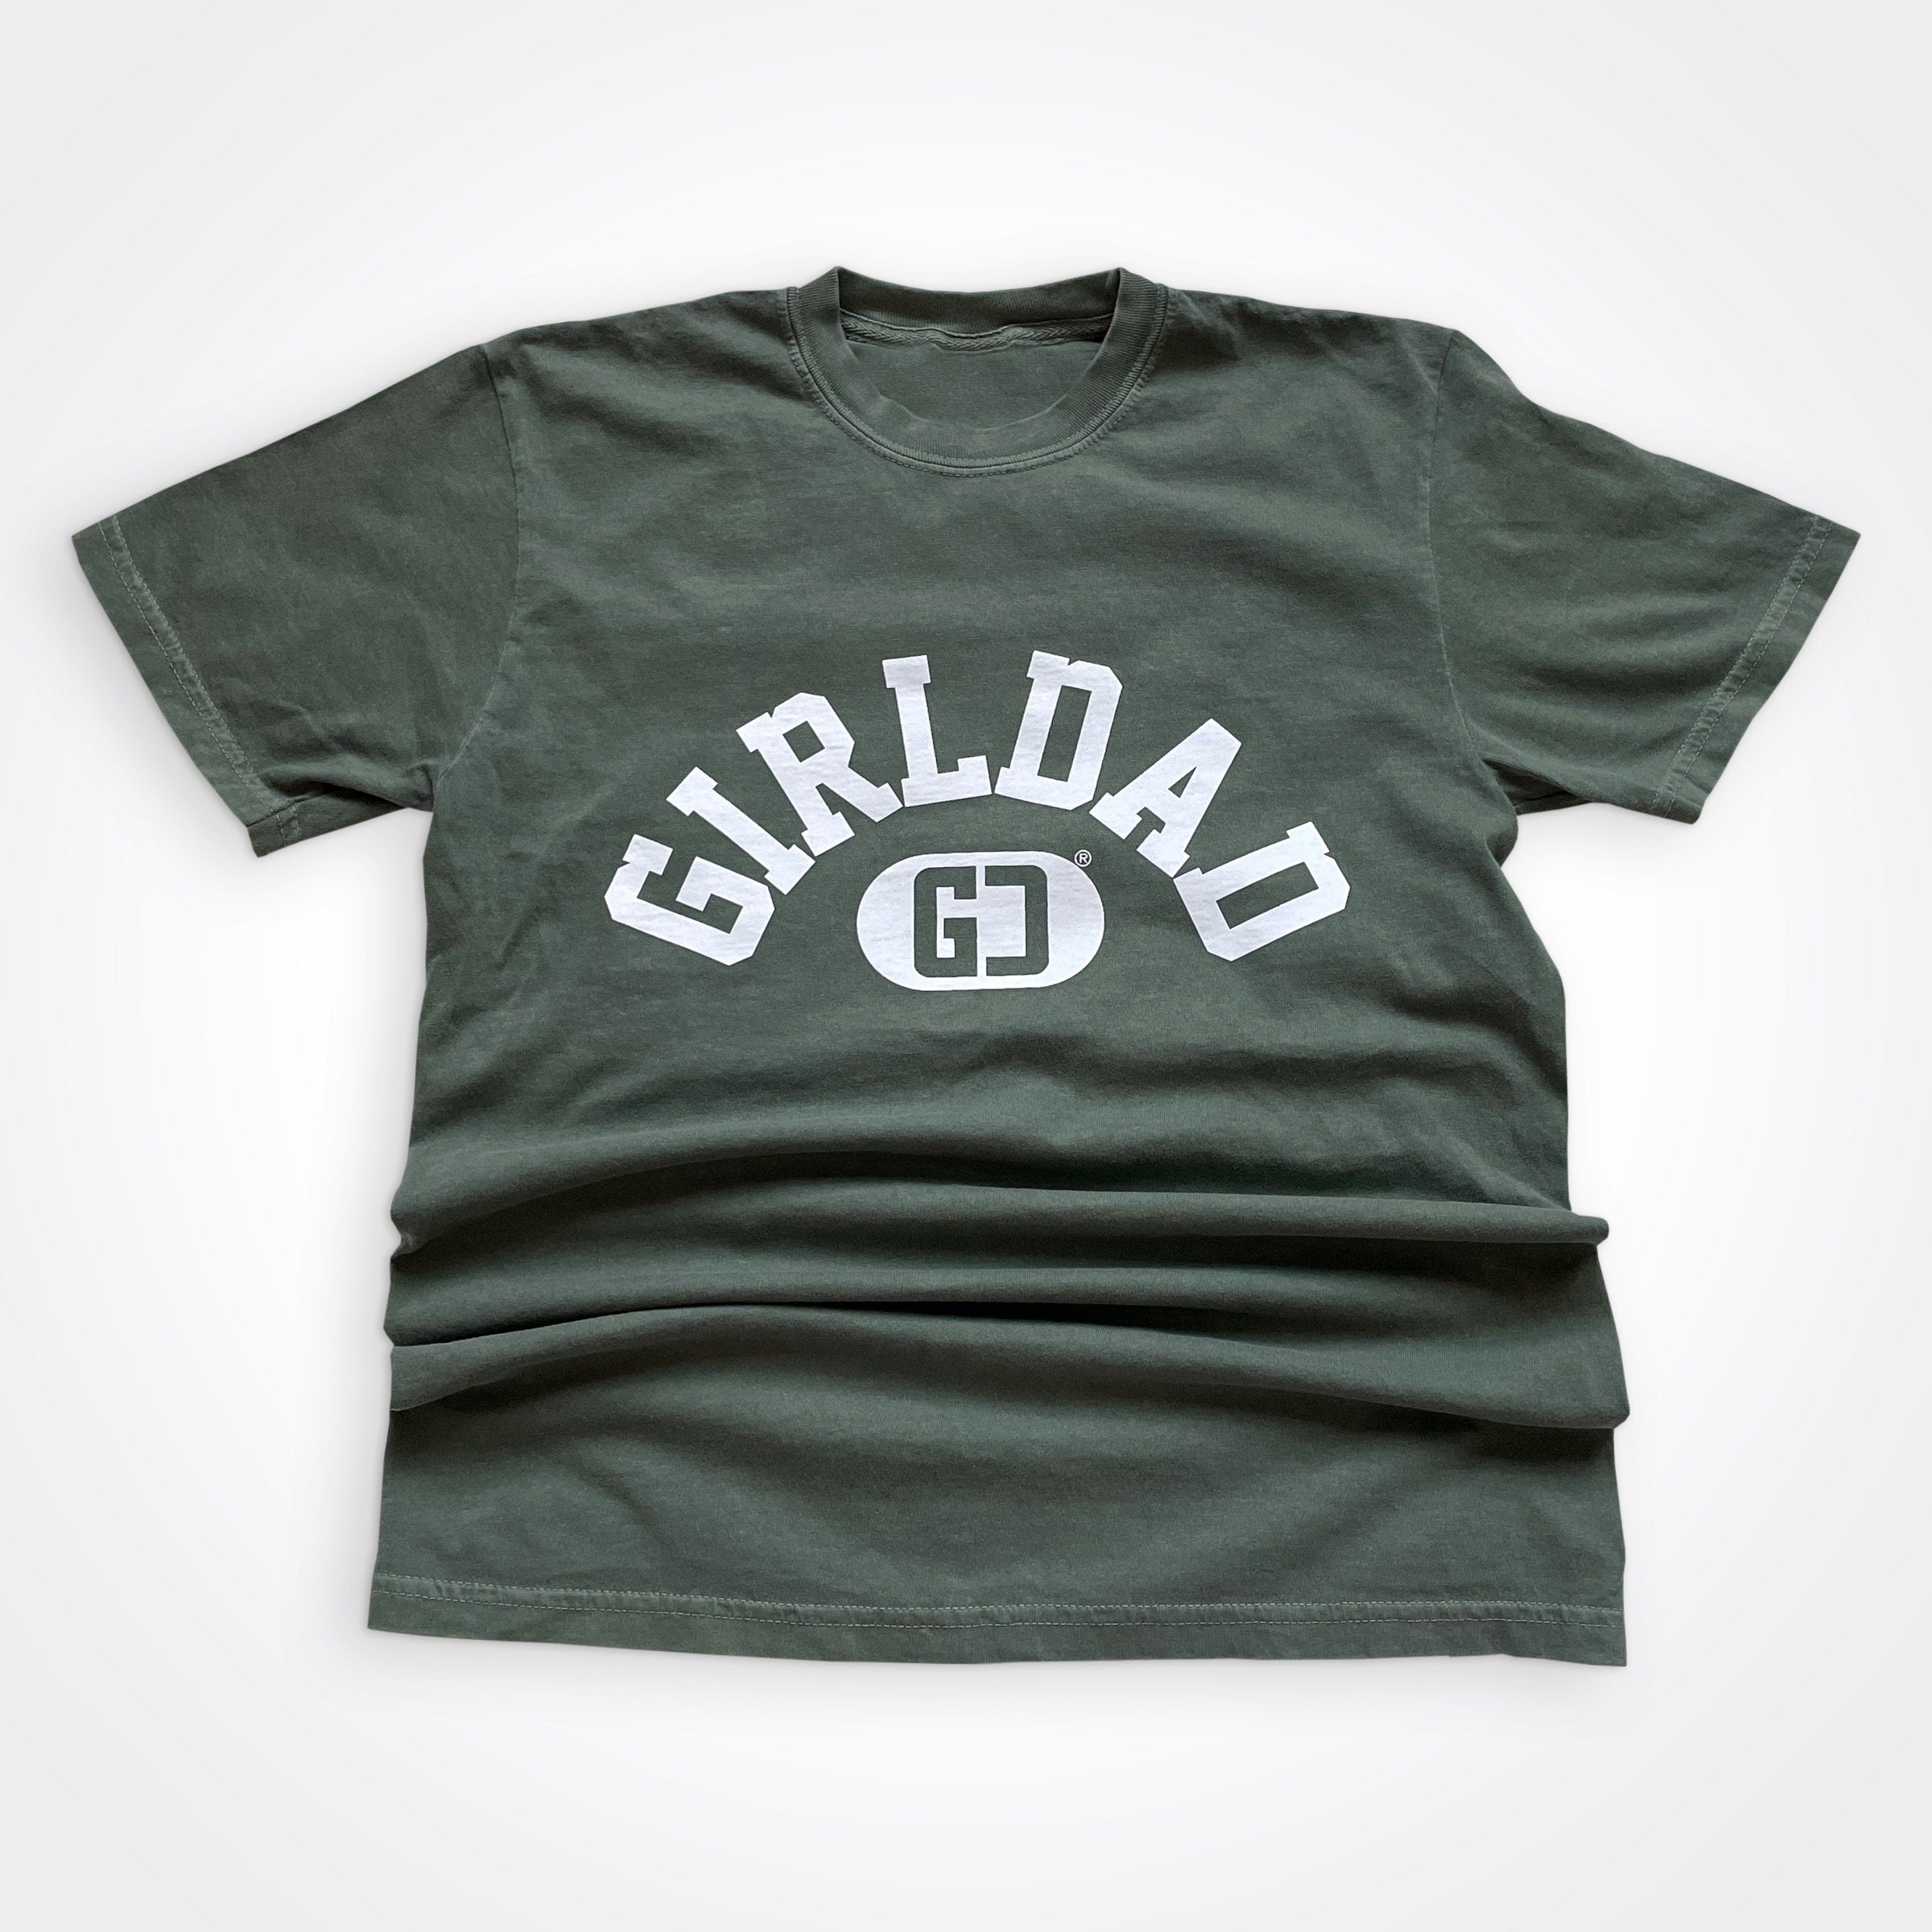 Girldad® Varsity Shirt in Moss Color